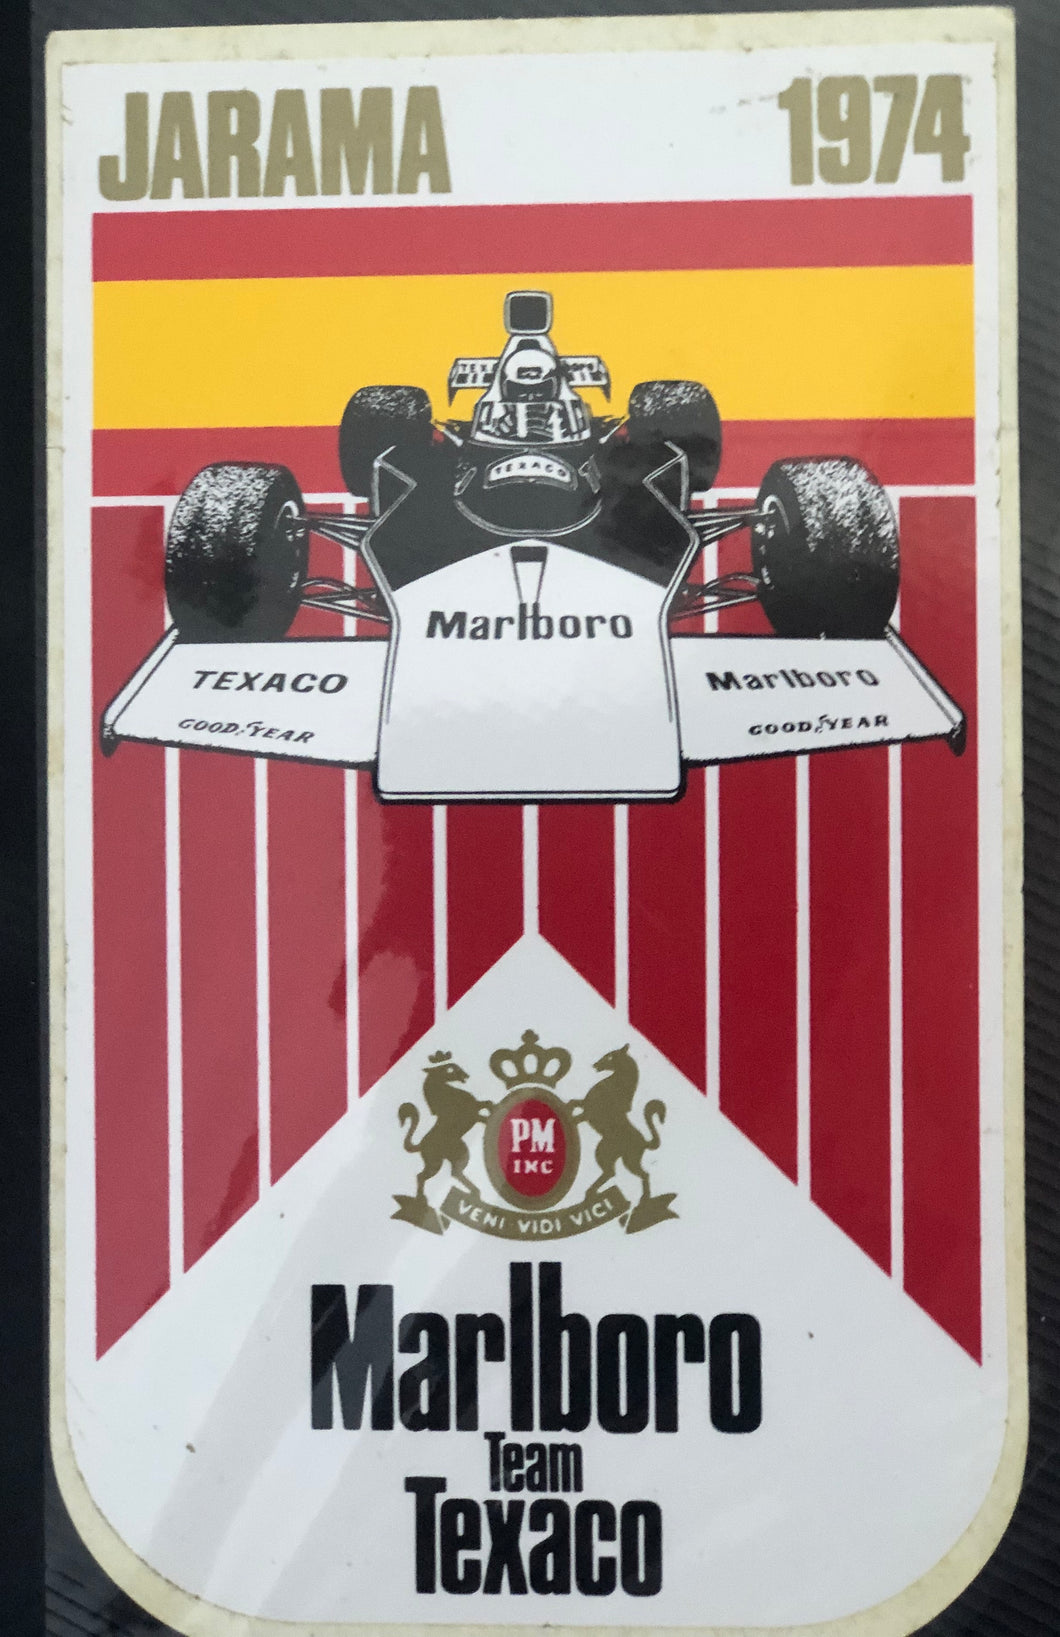 Marlboro team Texaco - Spanish 1974